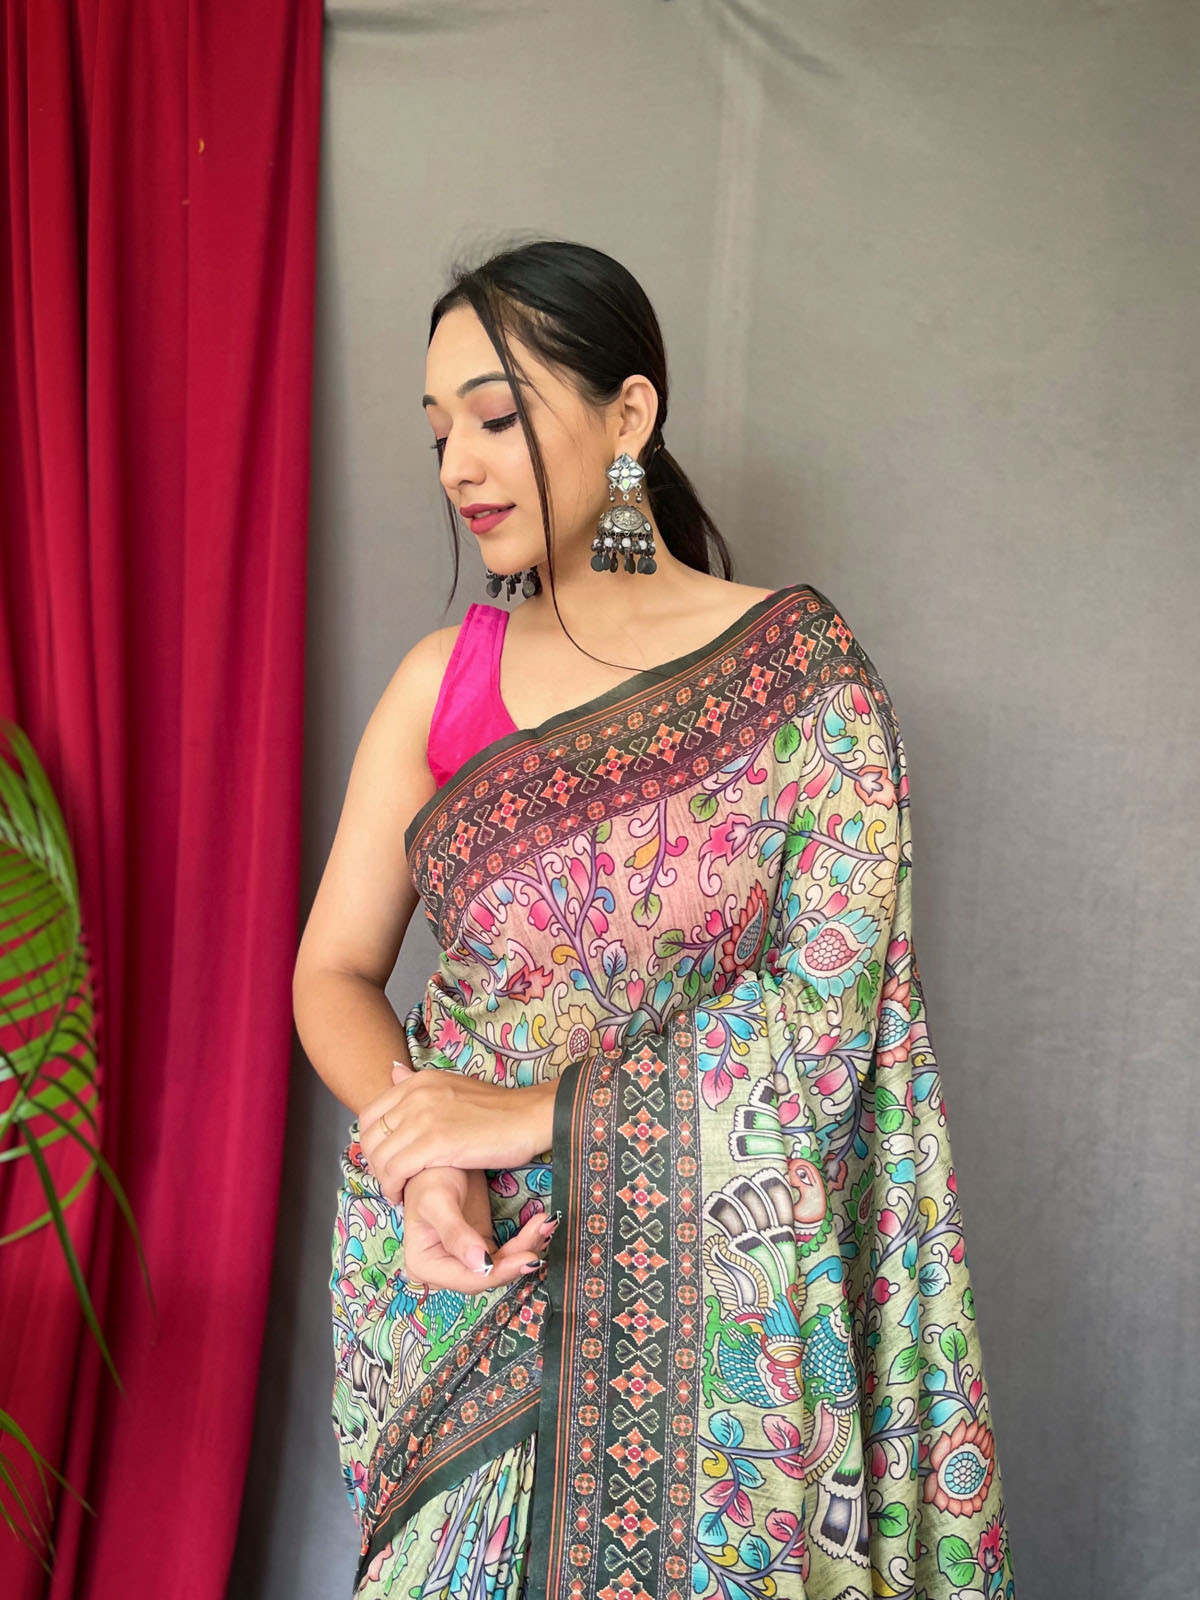 Beautiful Soft Cotton Saree With Bandhni & Kalamkari Print - Multi